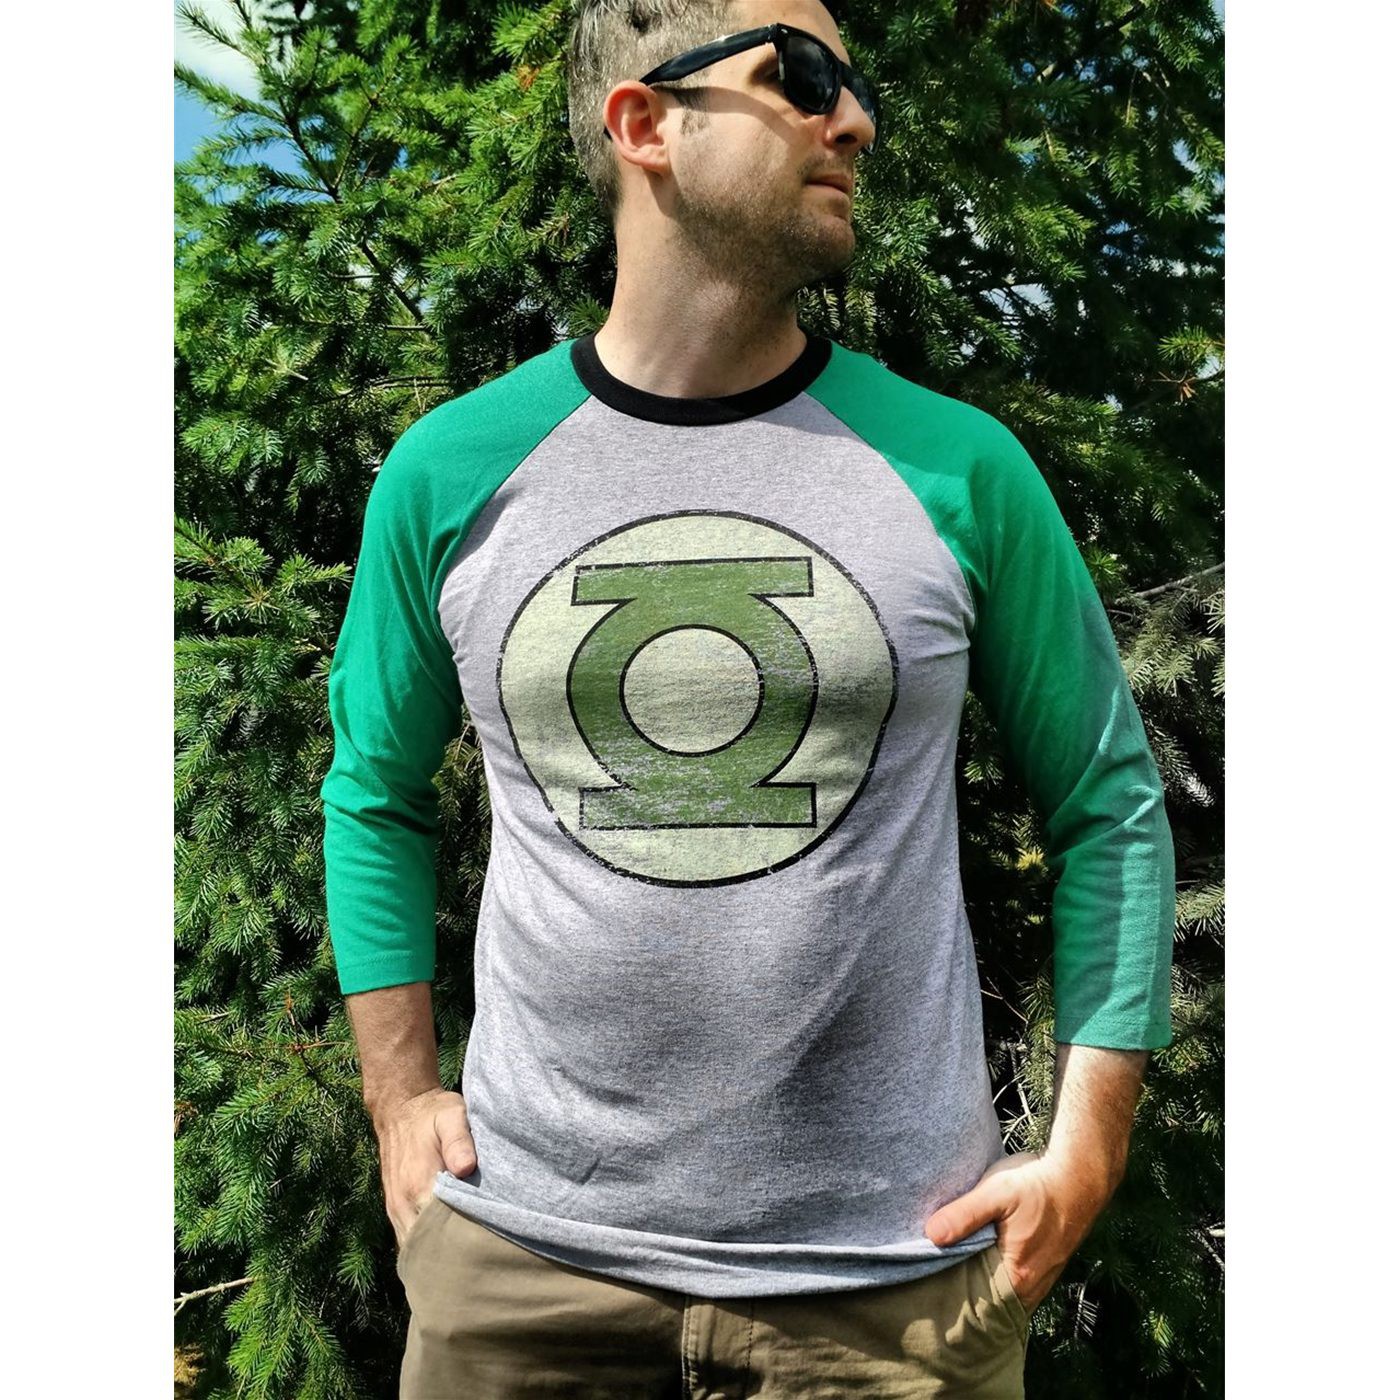 Green Lantern Symbol Men's Baseball T-Shirt